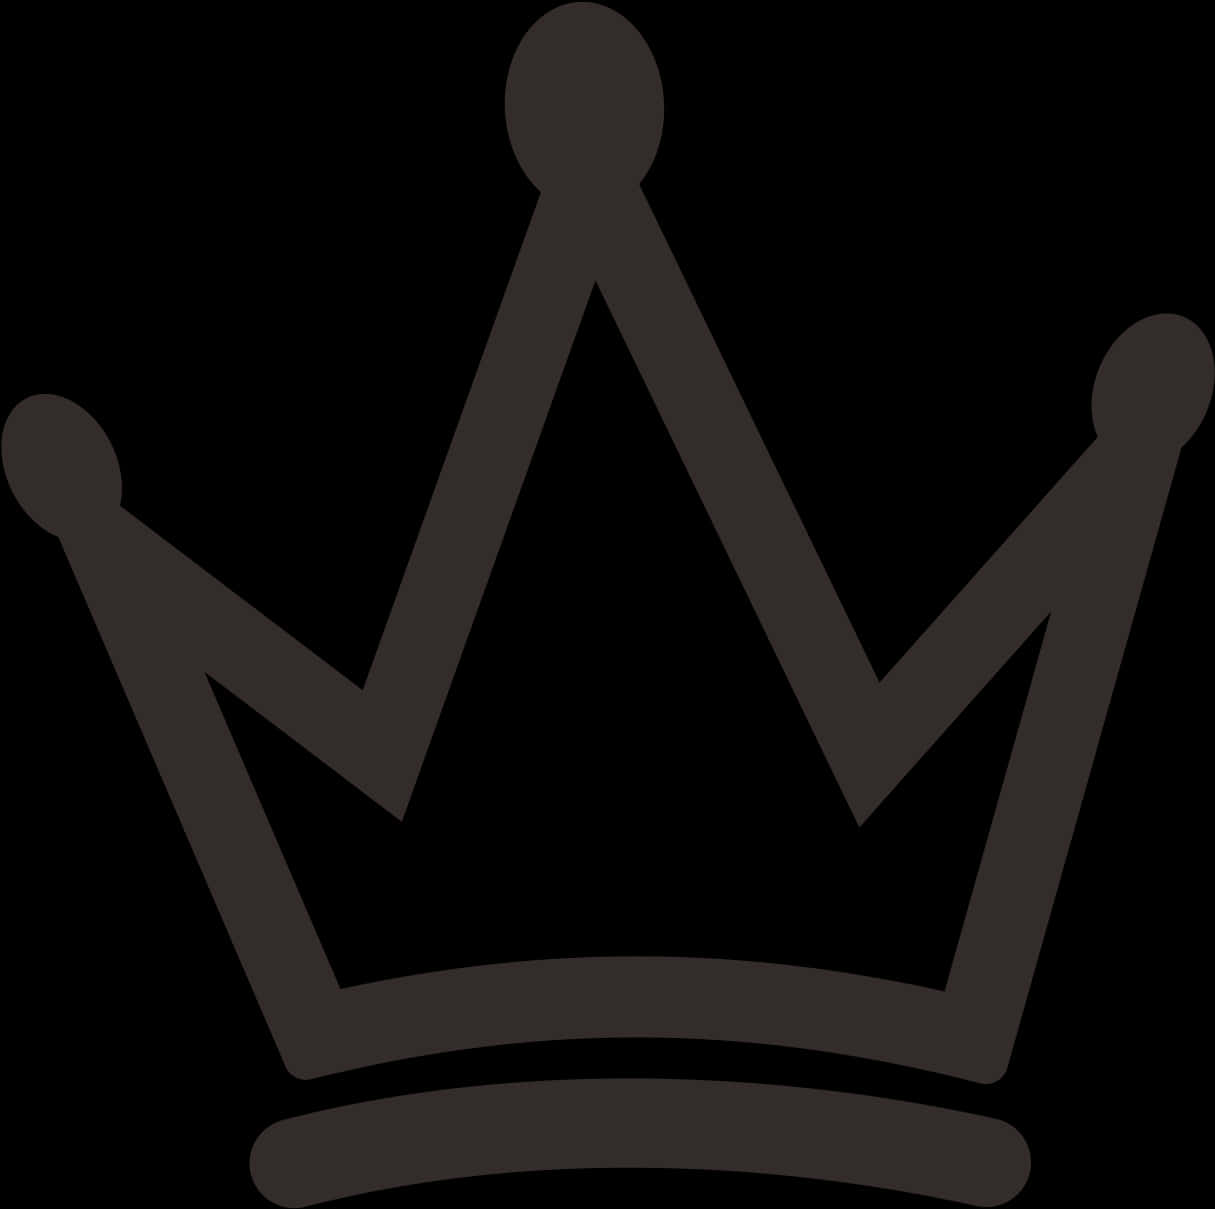 Black Crown Silhouette